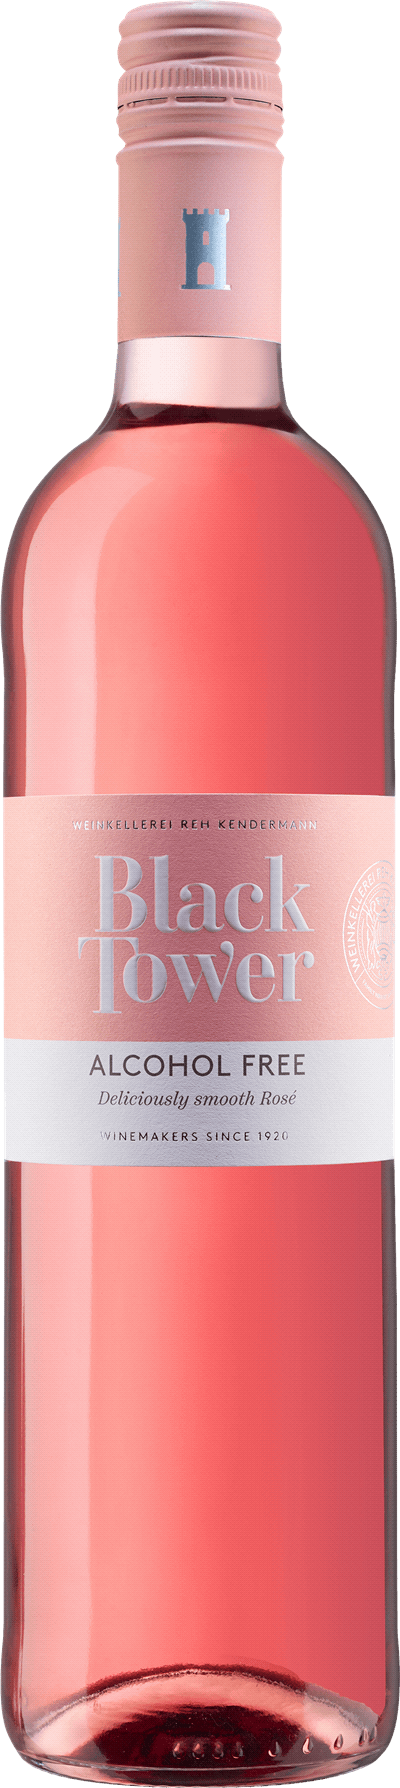 Black Tower Rosé Alcohol Free